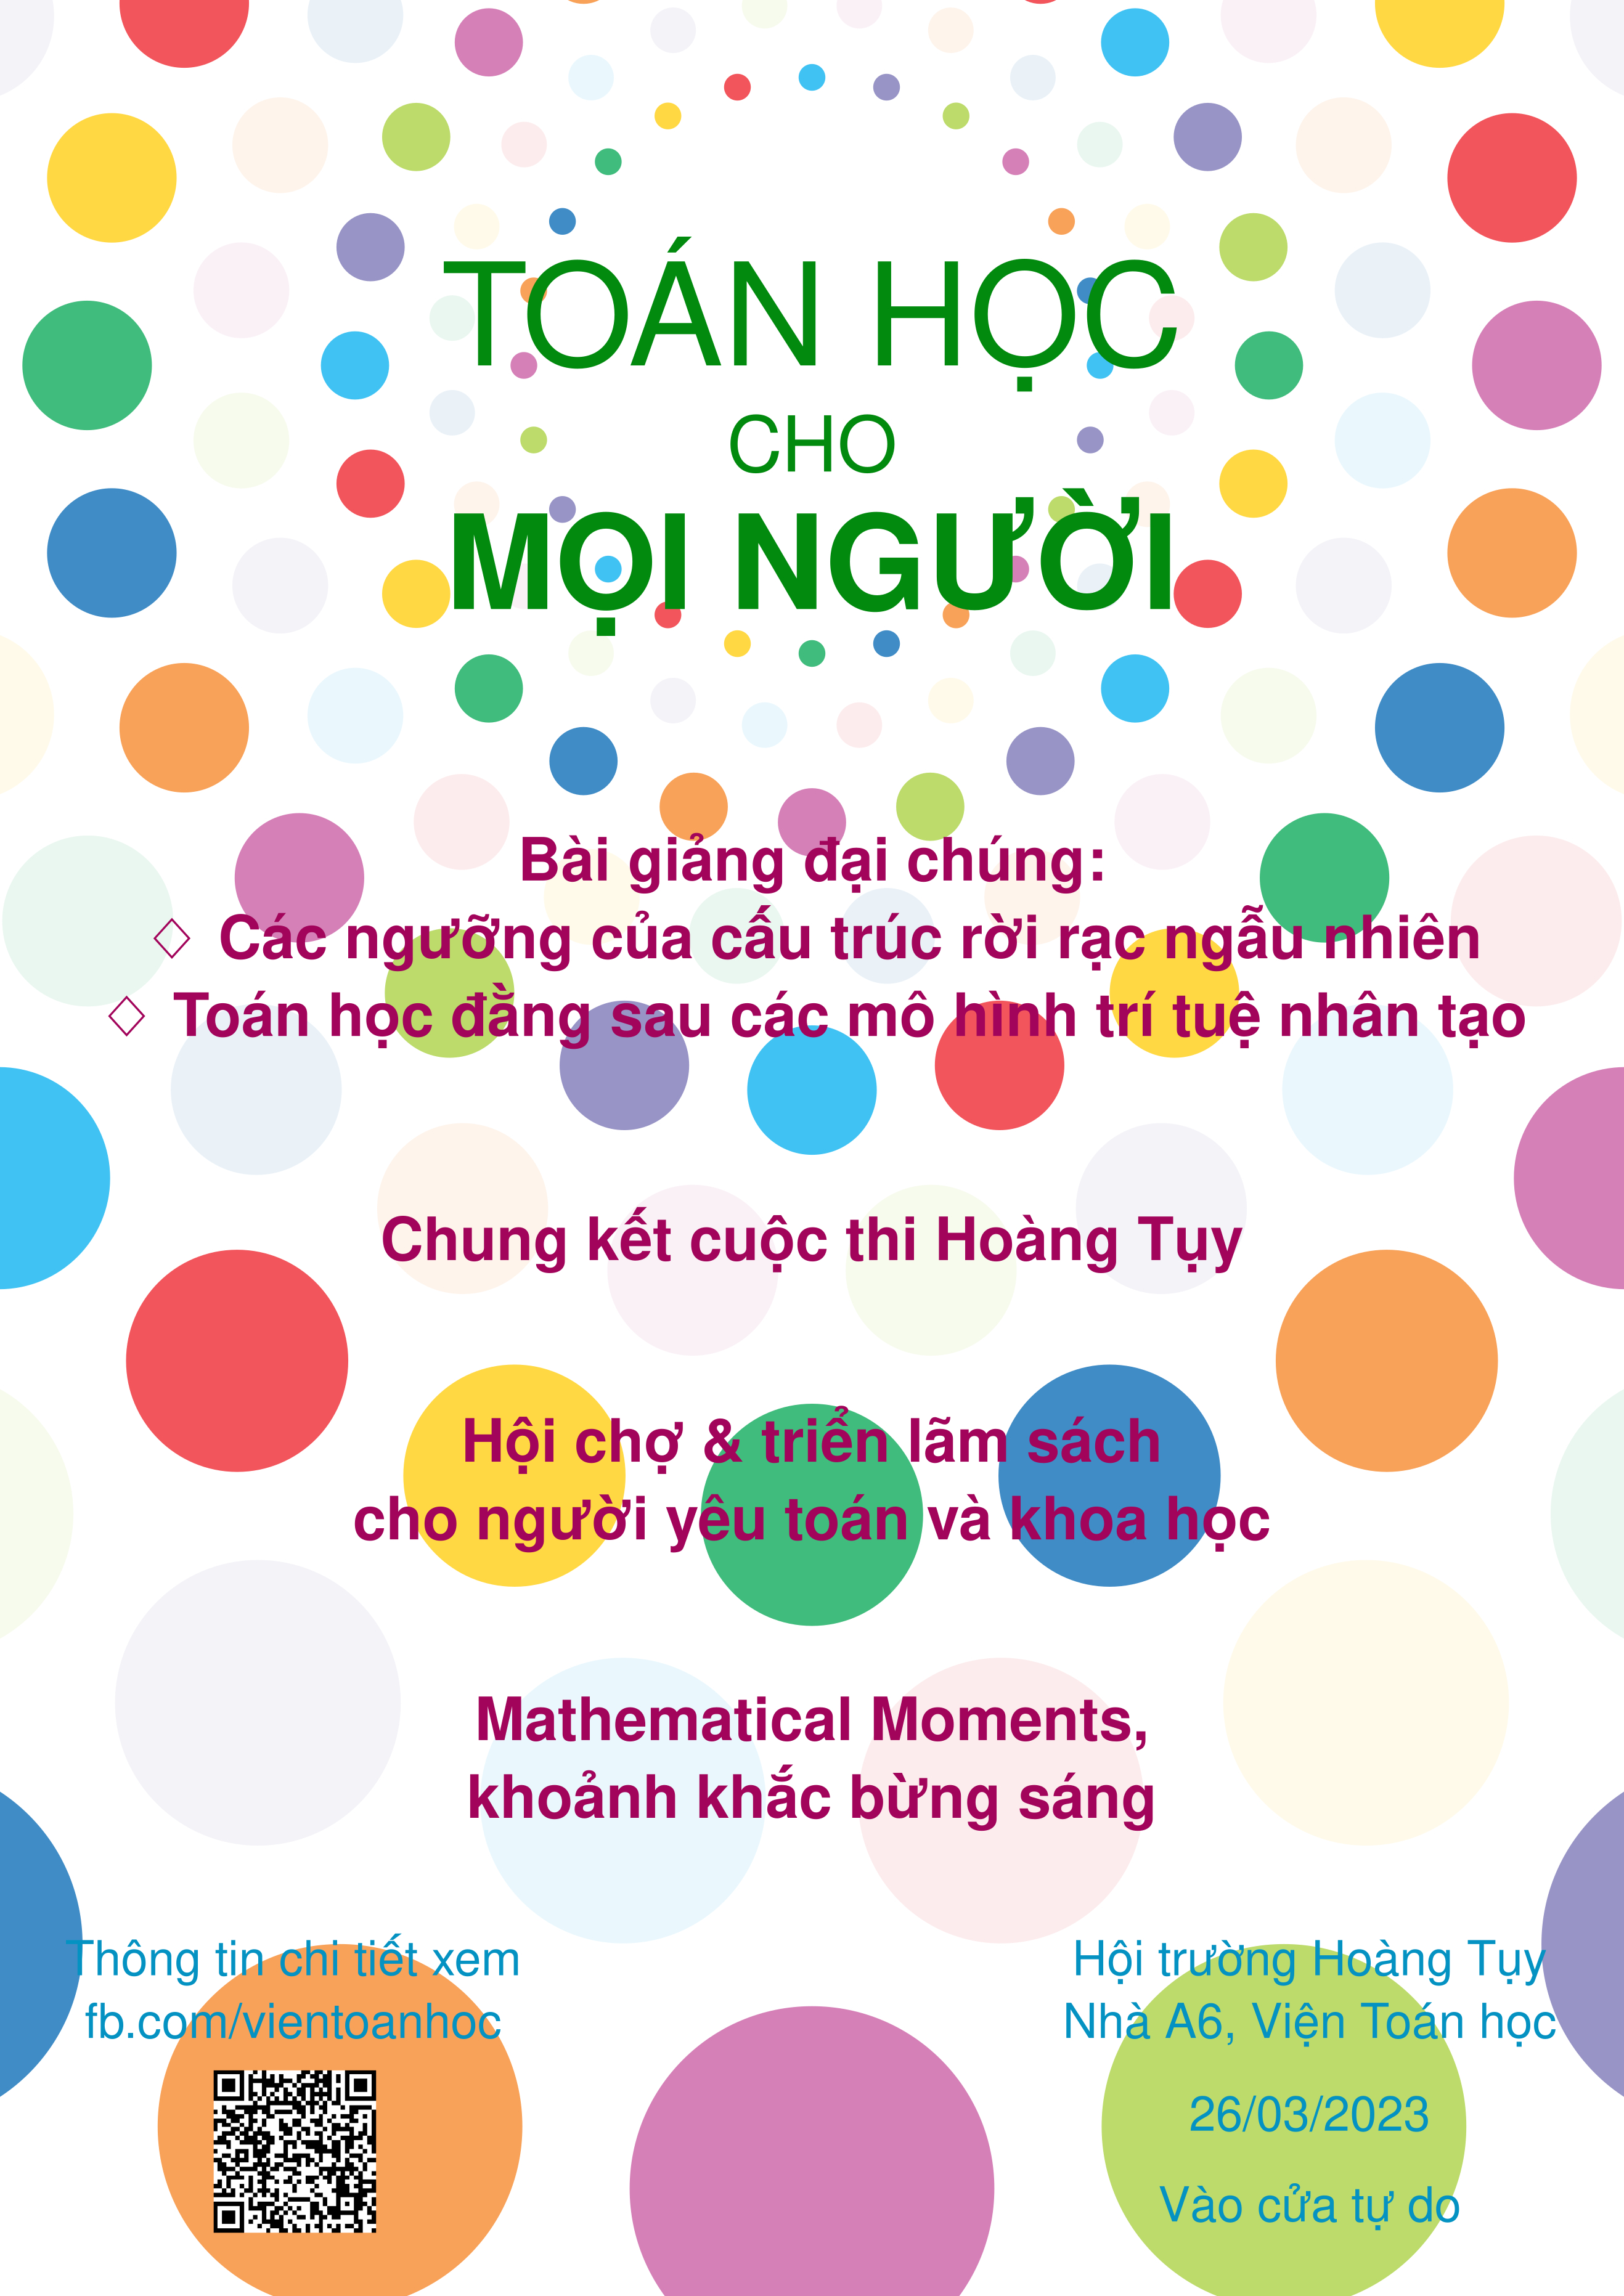 ToanhocchoMoinguoi poster